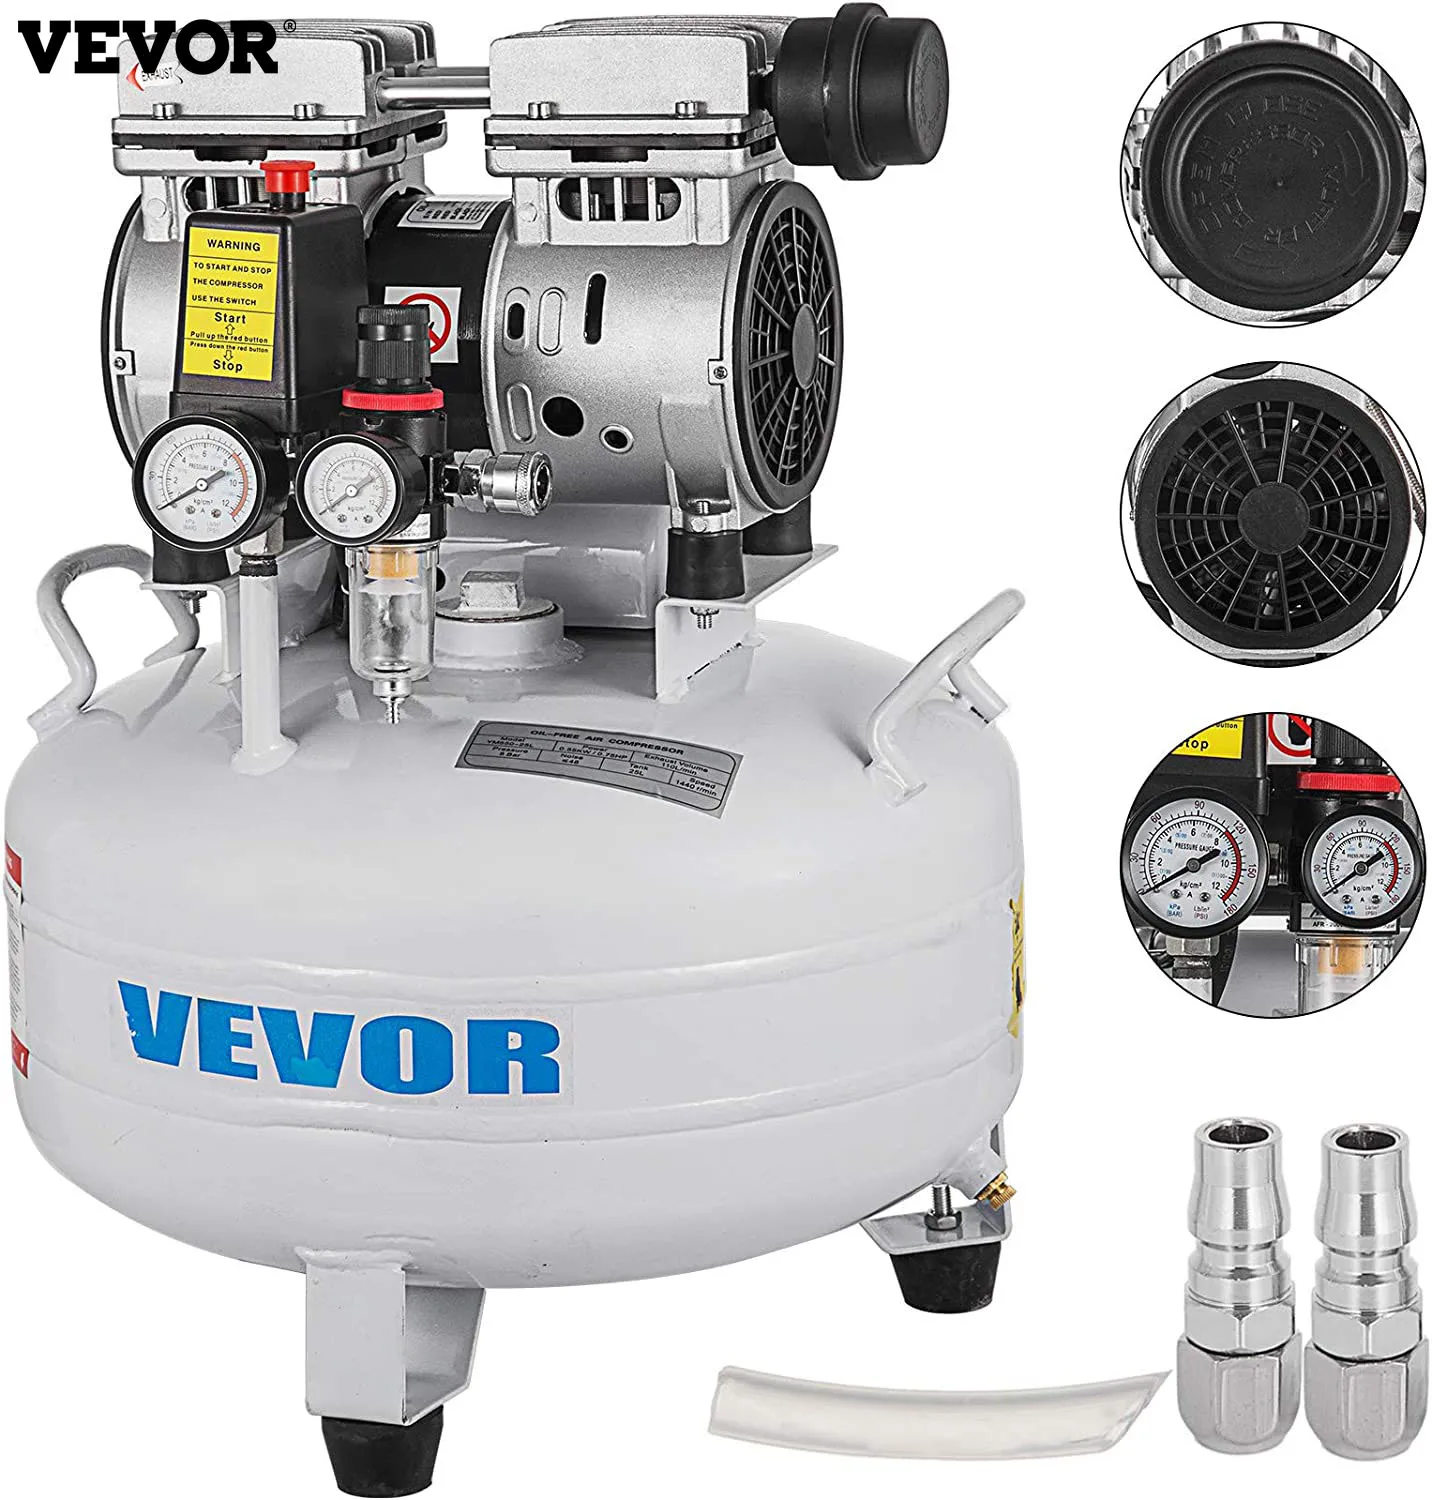 

VEVOR 5.5 Gallon Ultra Quiet Oil-free Air Compressor 25L Tank Silent Air Compressor 550W Oil free Compressor Low noise